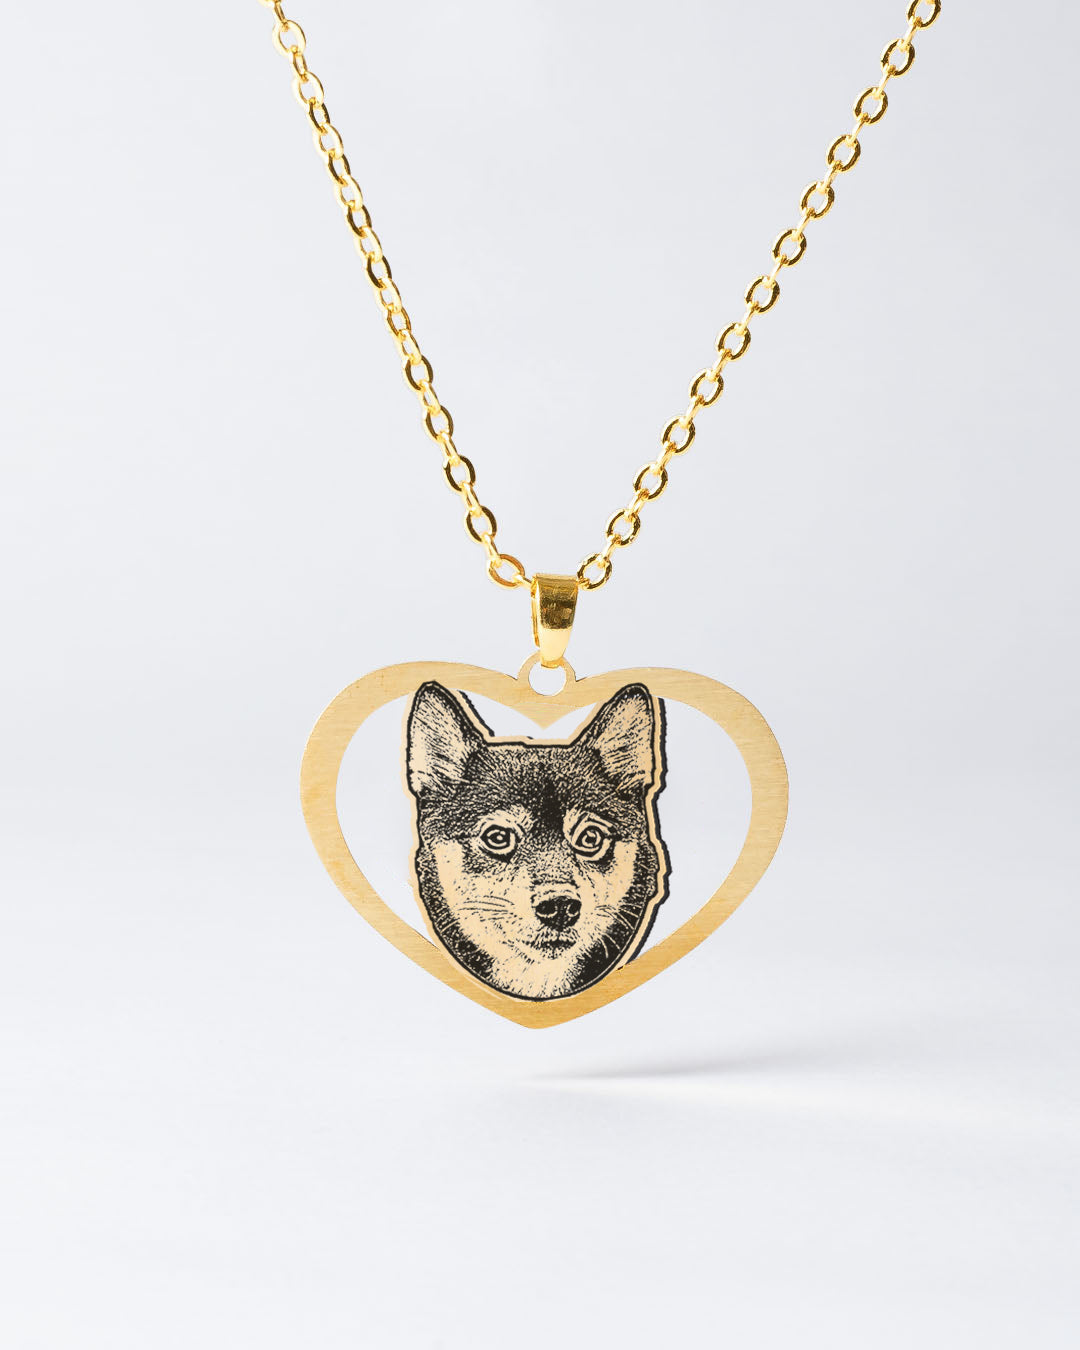 Personalized Halo Heart Dog Necklace with Custom Engraved Photo - Heartfelt Keepsake for Dog Owners